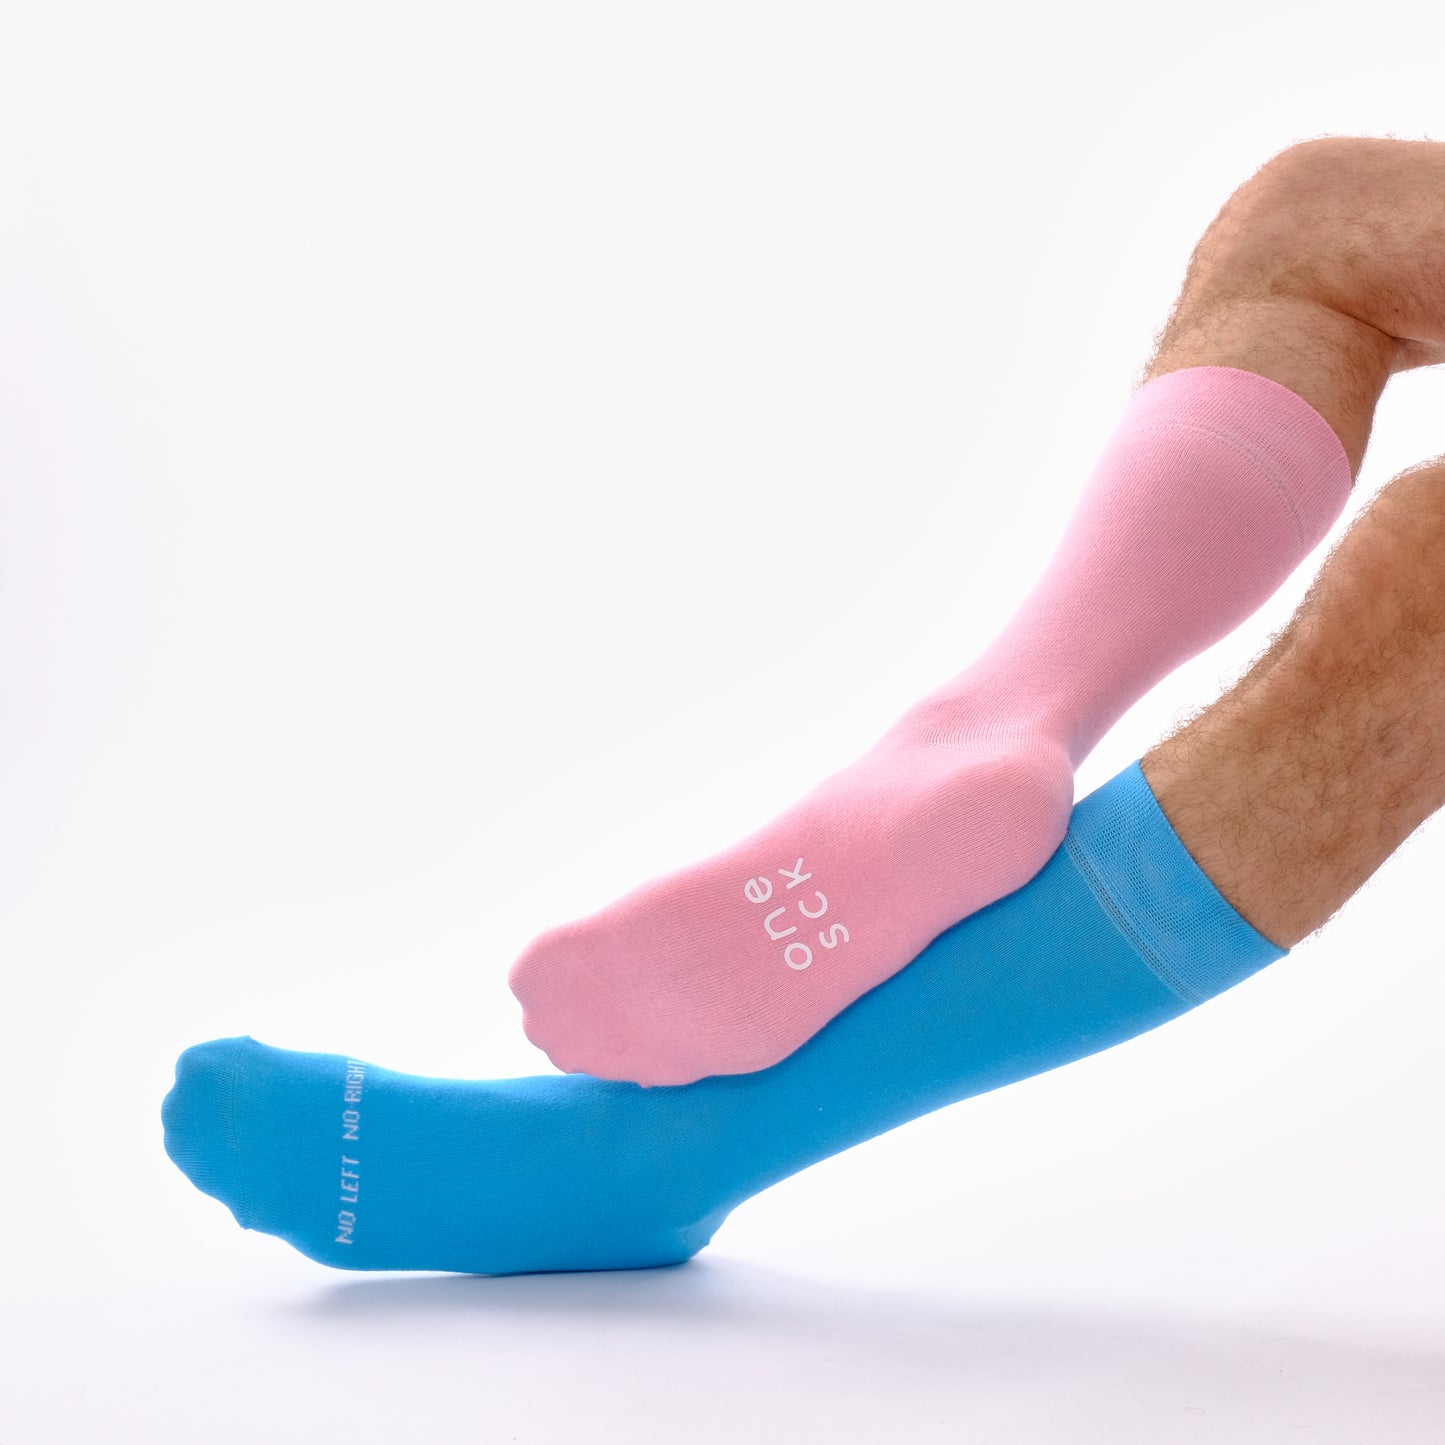 University Blue and Candy Pink Odd Socks